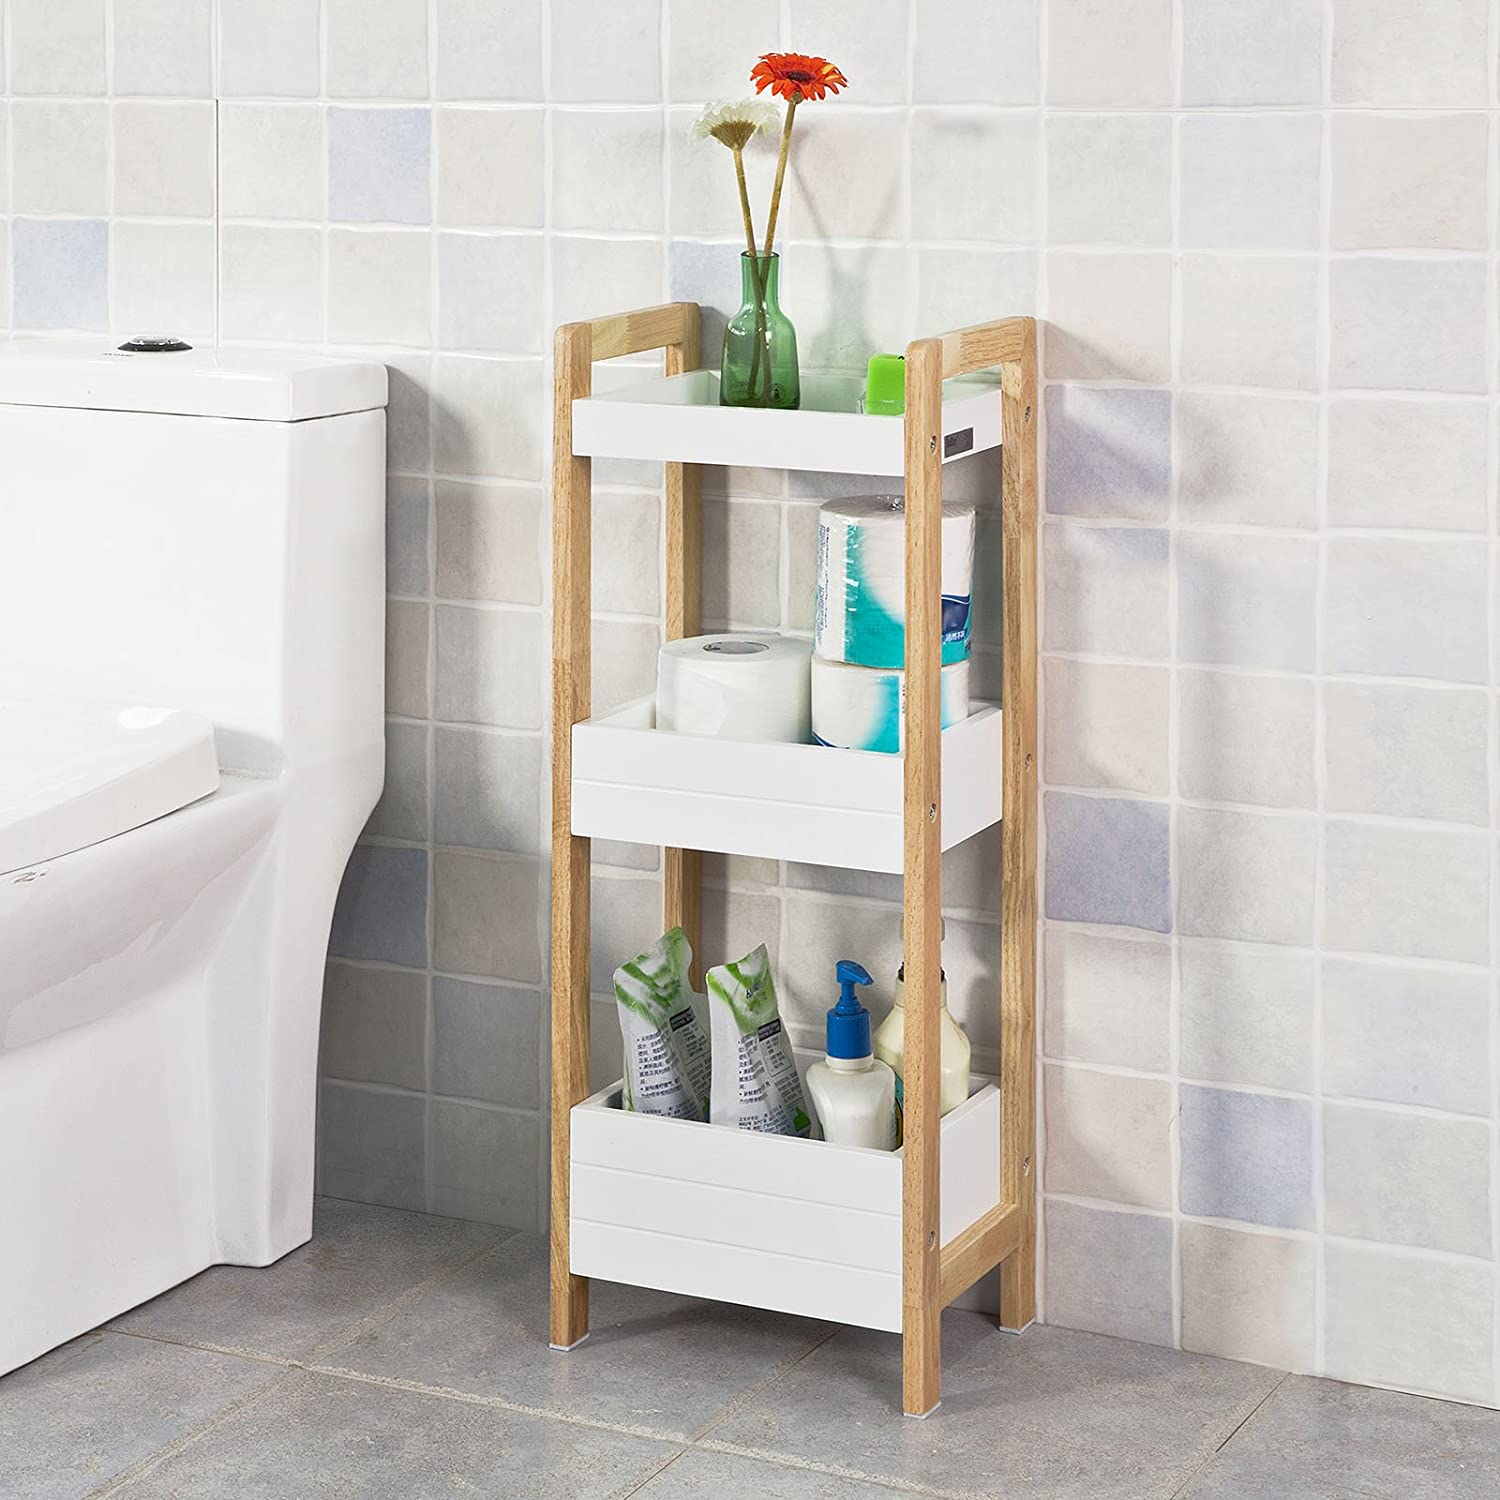 3-Tier White Storage Bathroom Shelf - image5